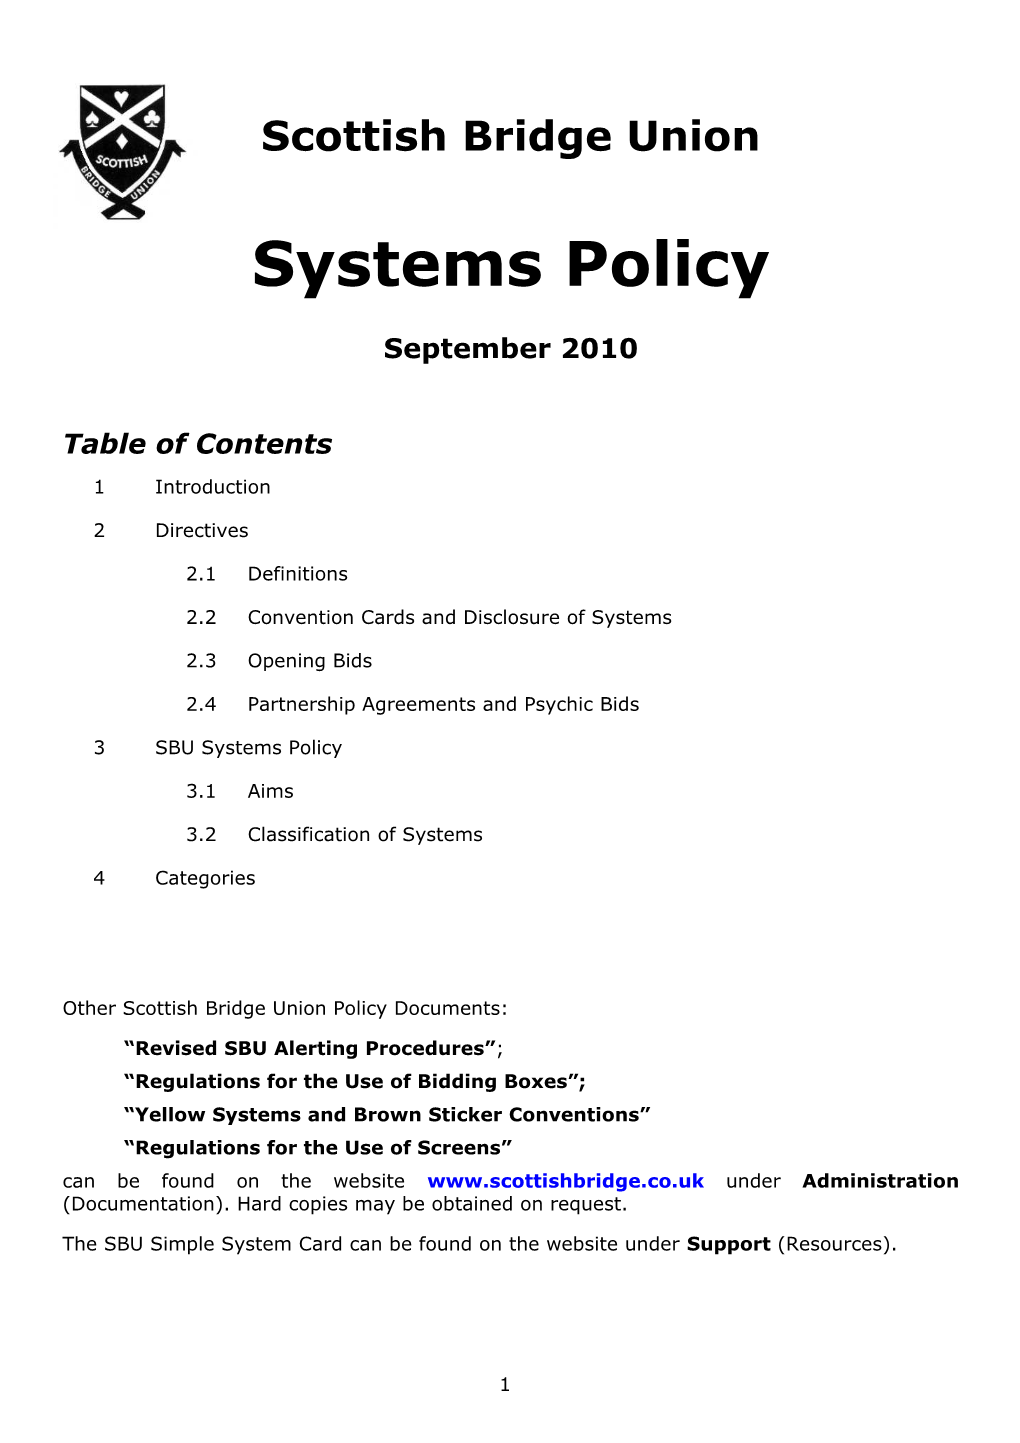 SBU Systems Policy